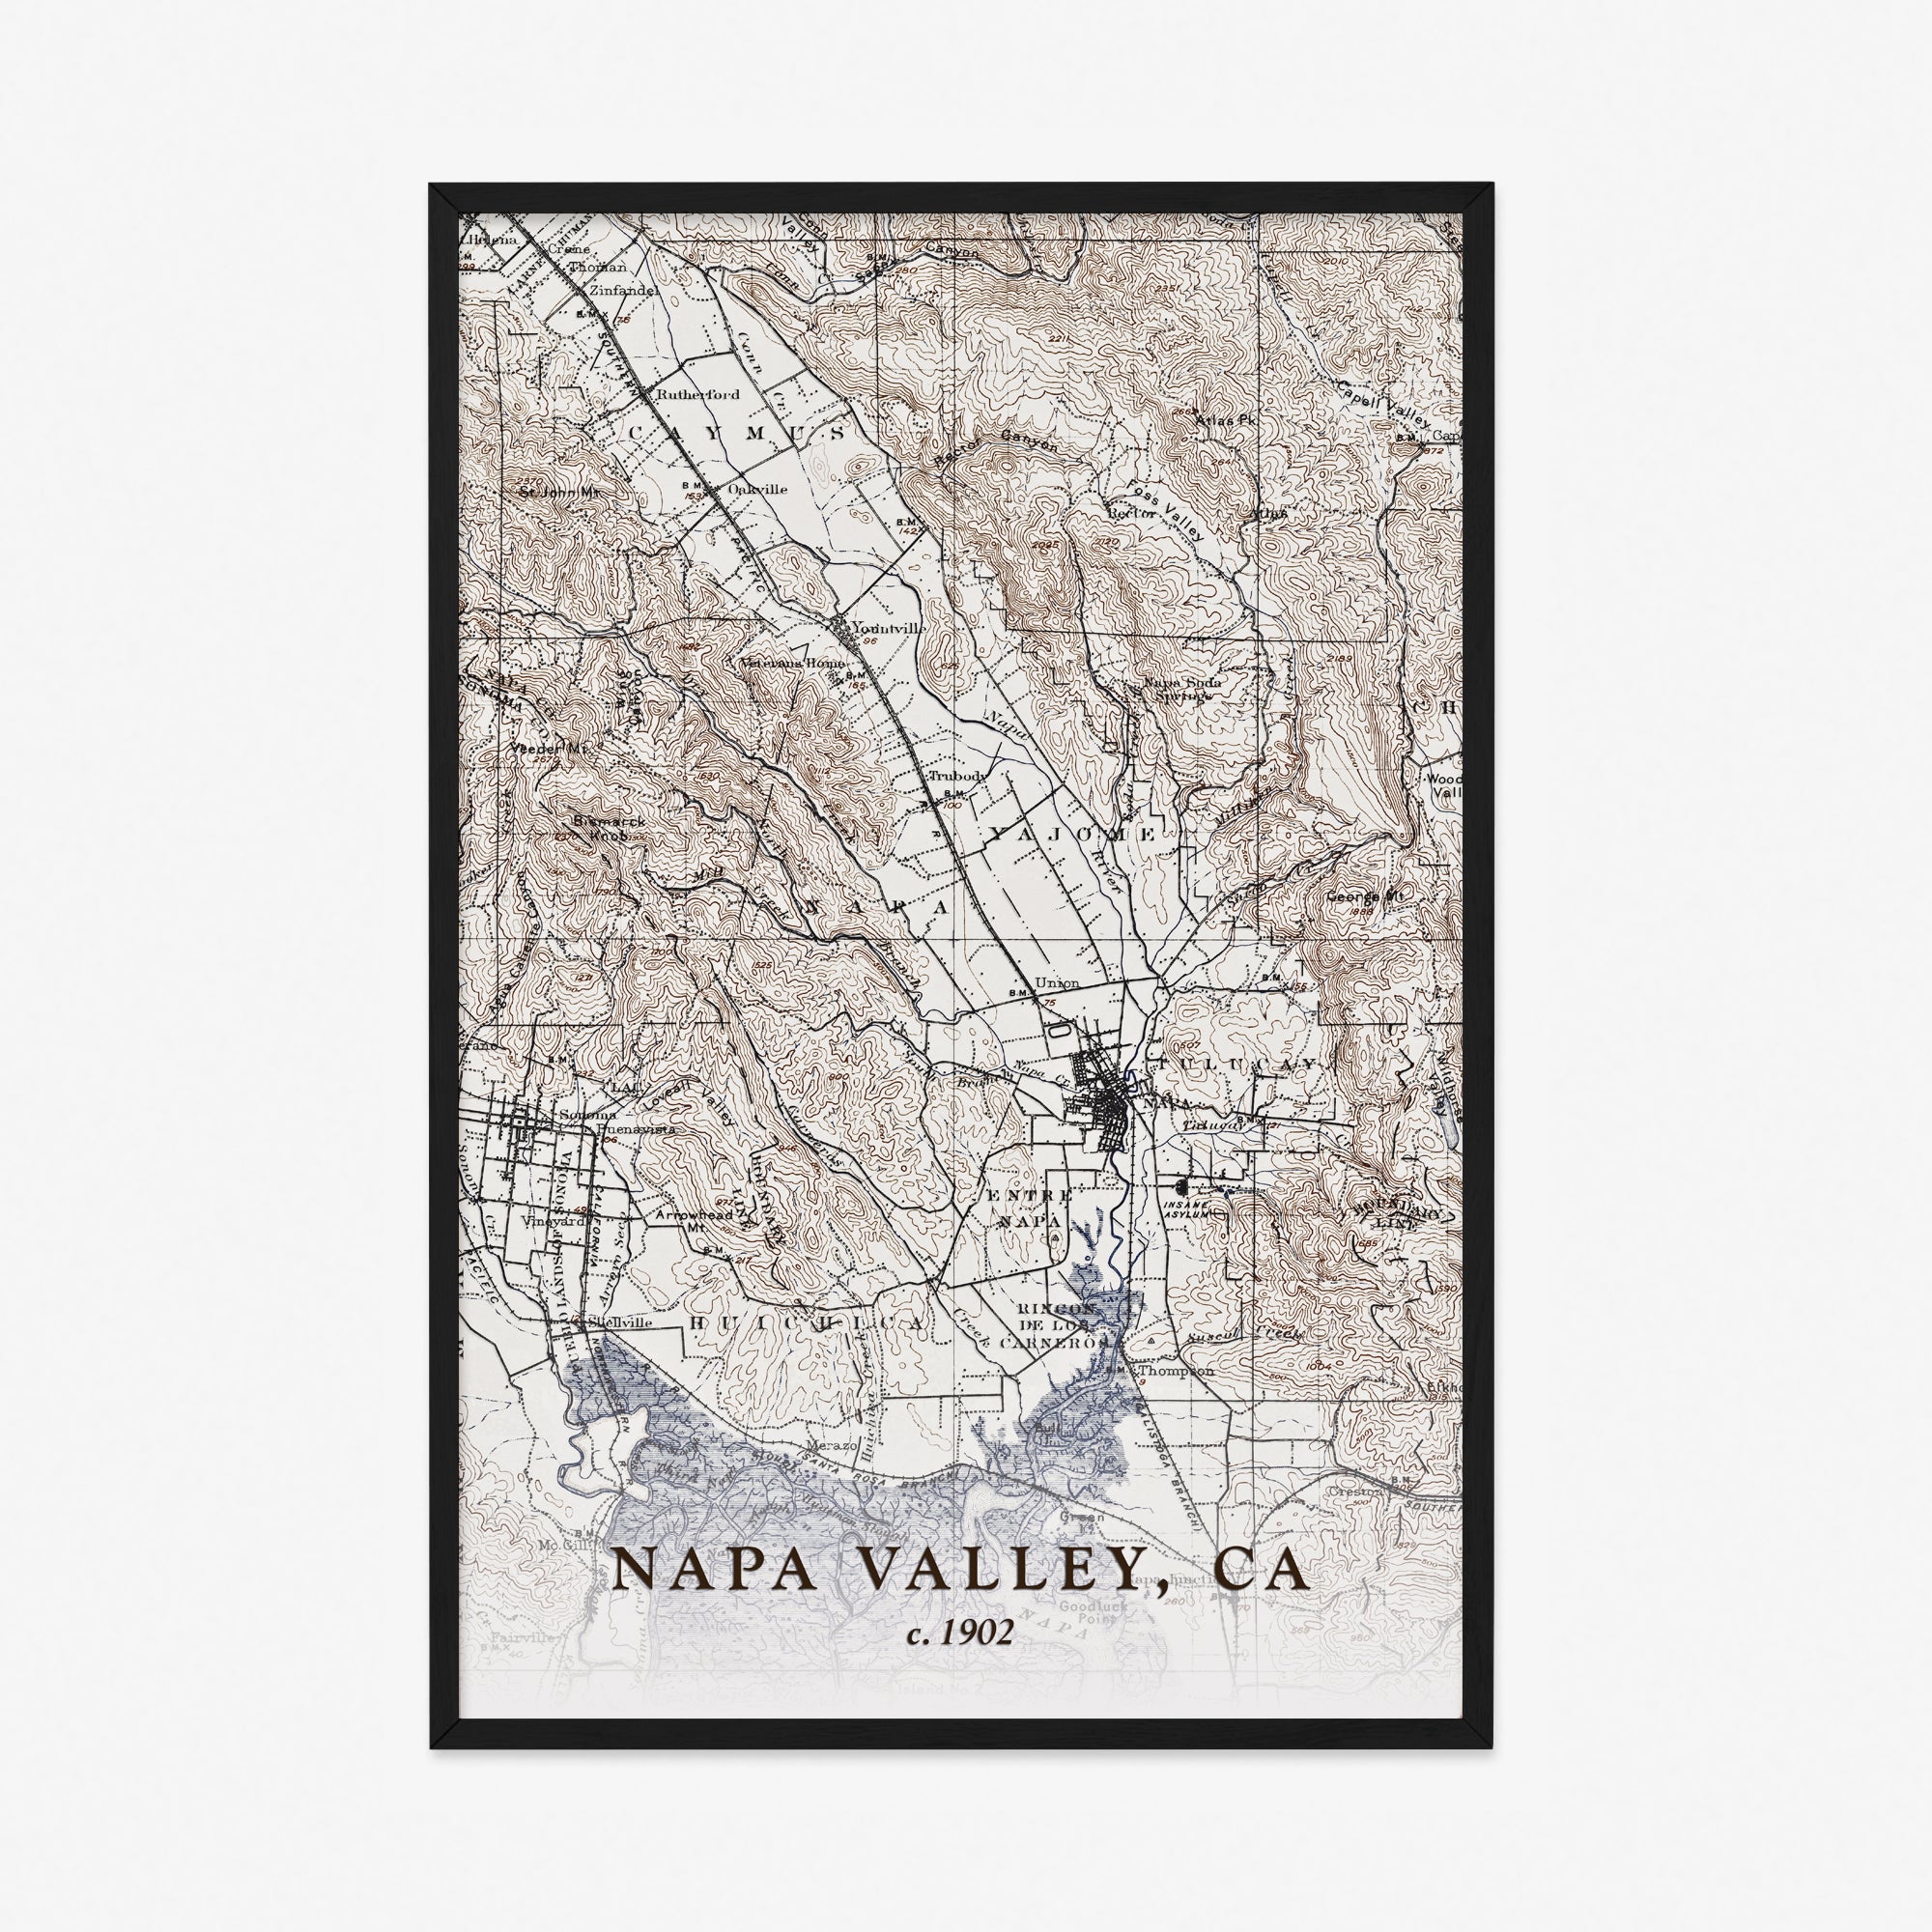 Napa Valley, CA - 1902 Topographic Map